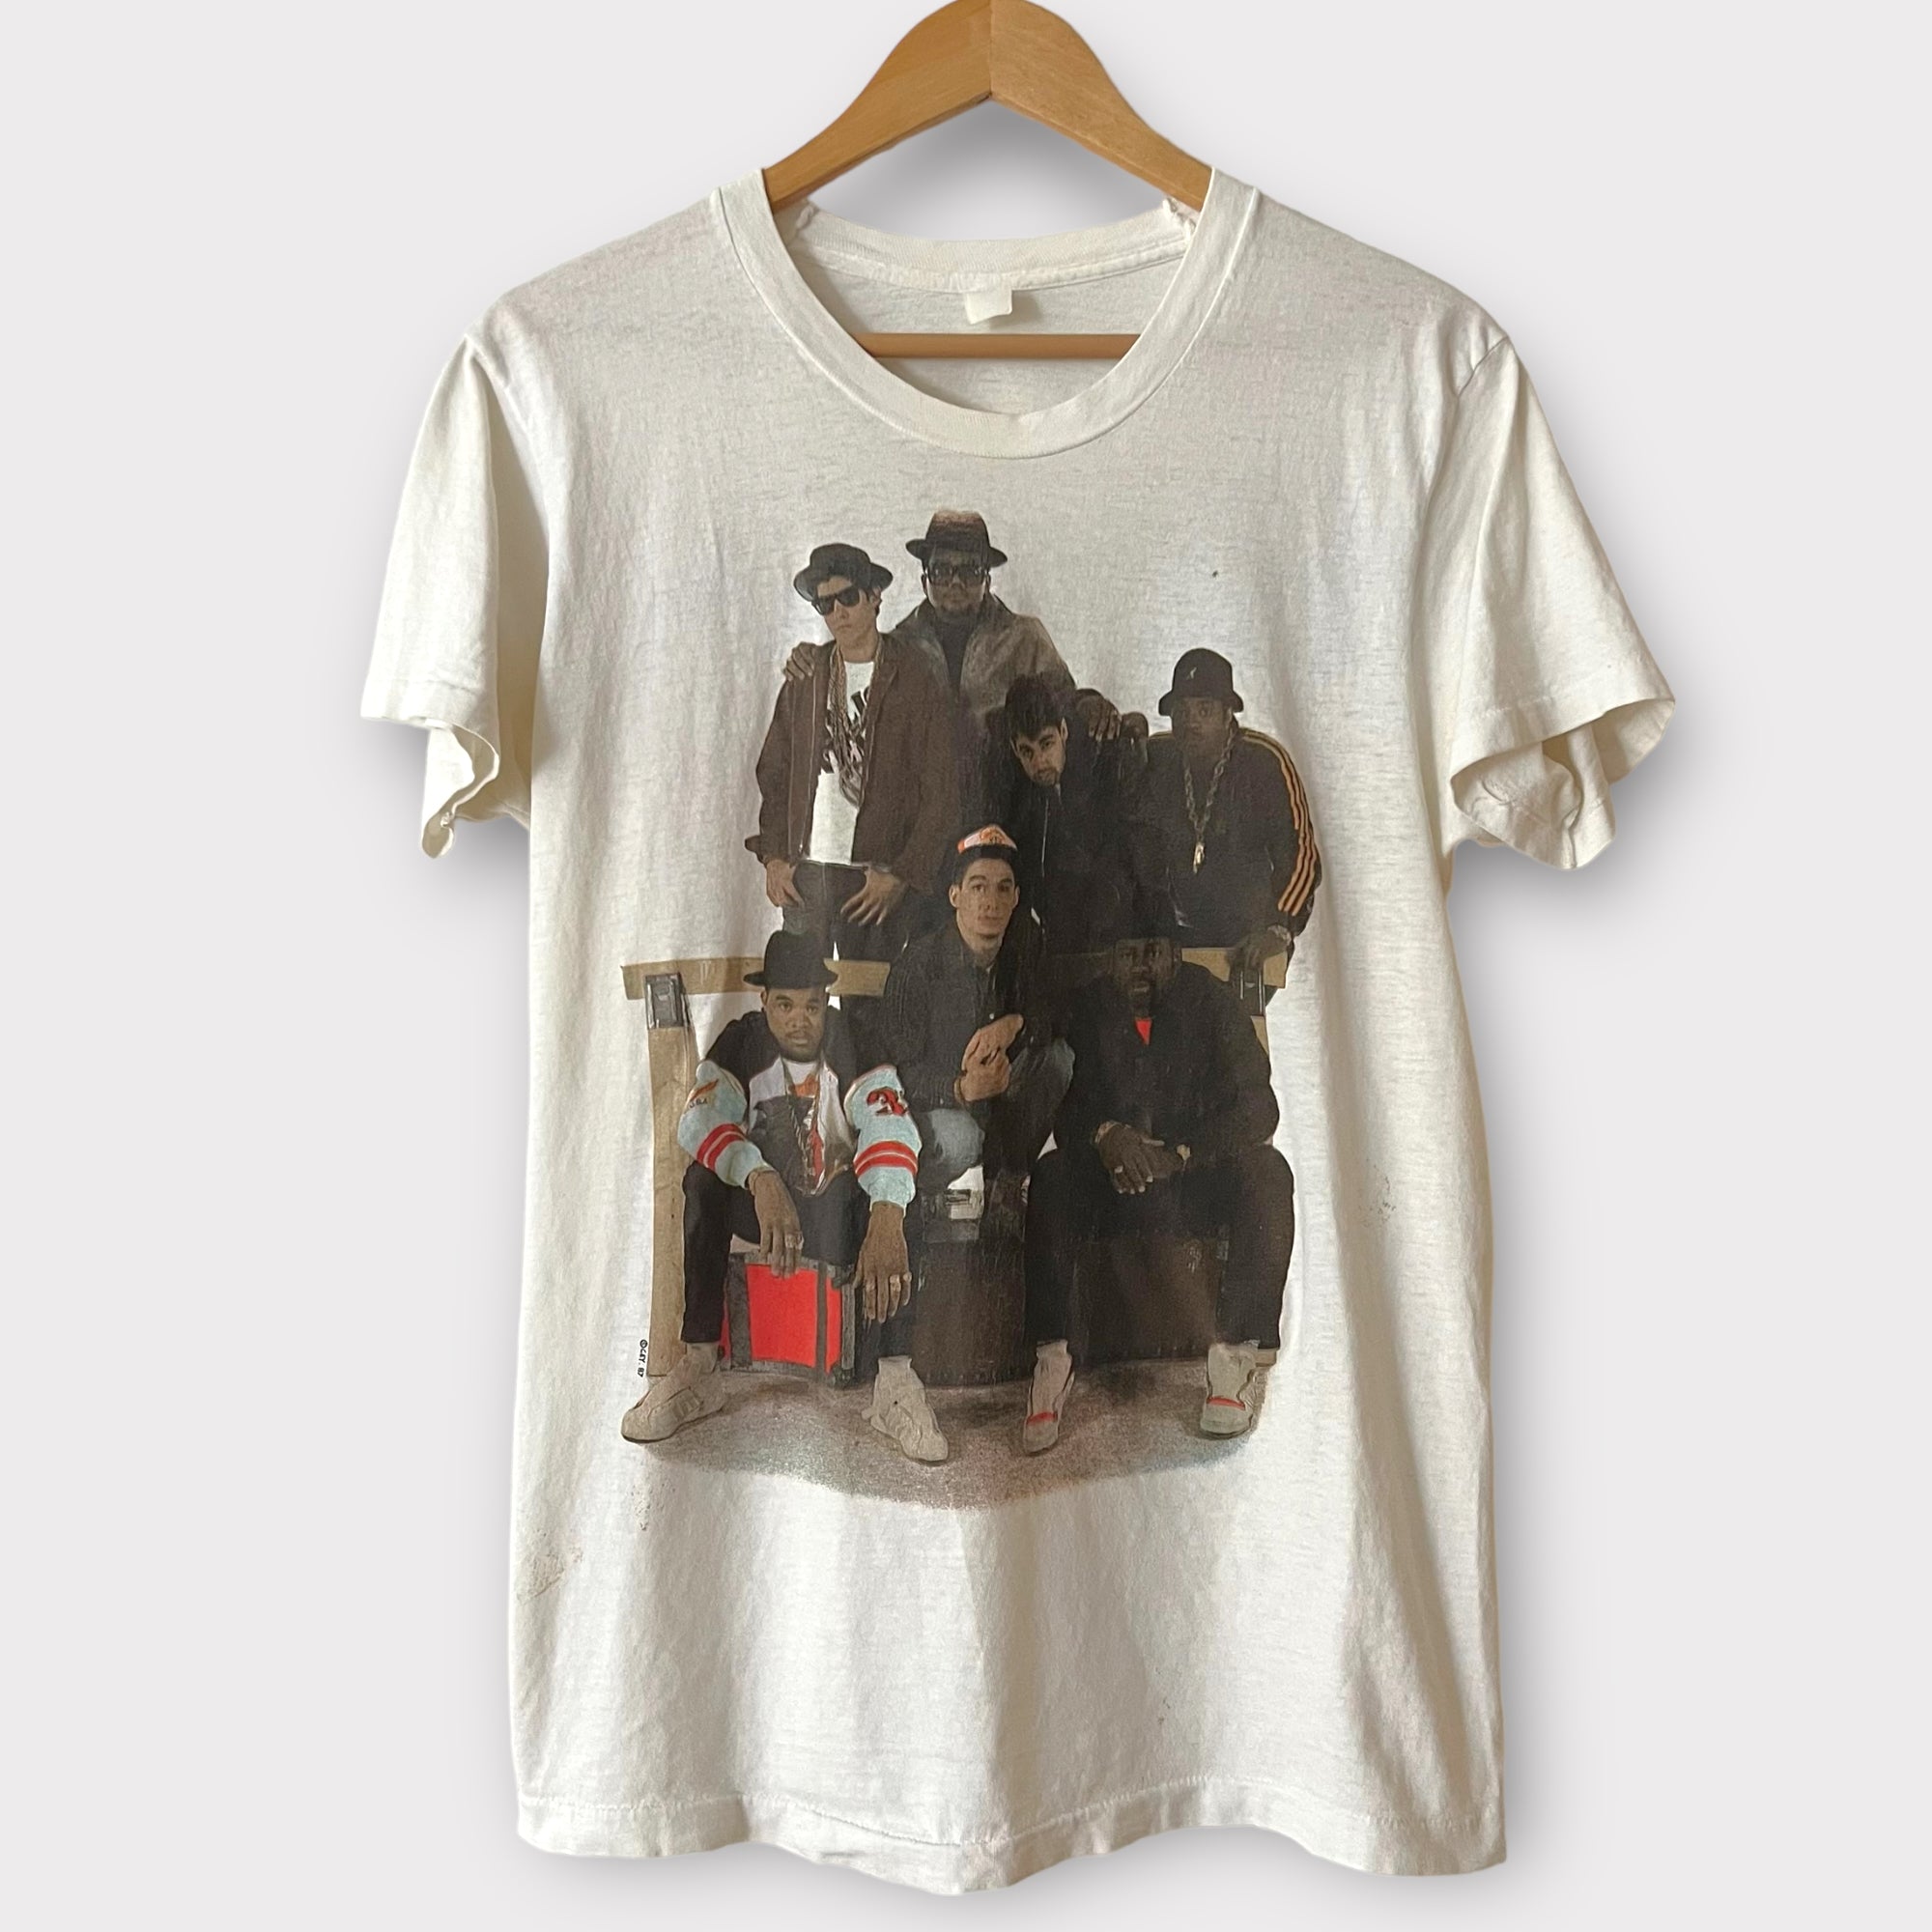 1987 Beastie Boys + RUN DMC Vintage Tour Rap Tee Shirt – Zeros Revival